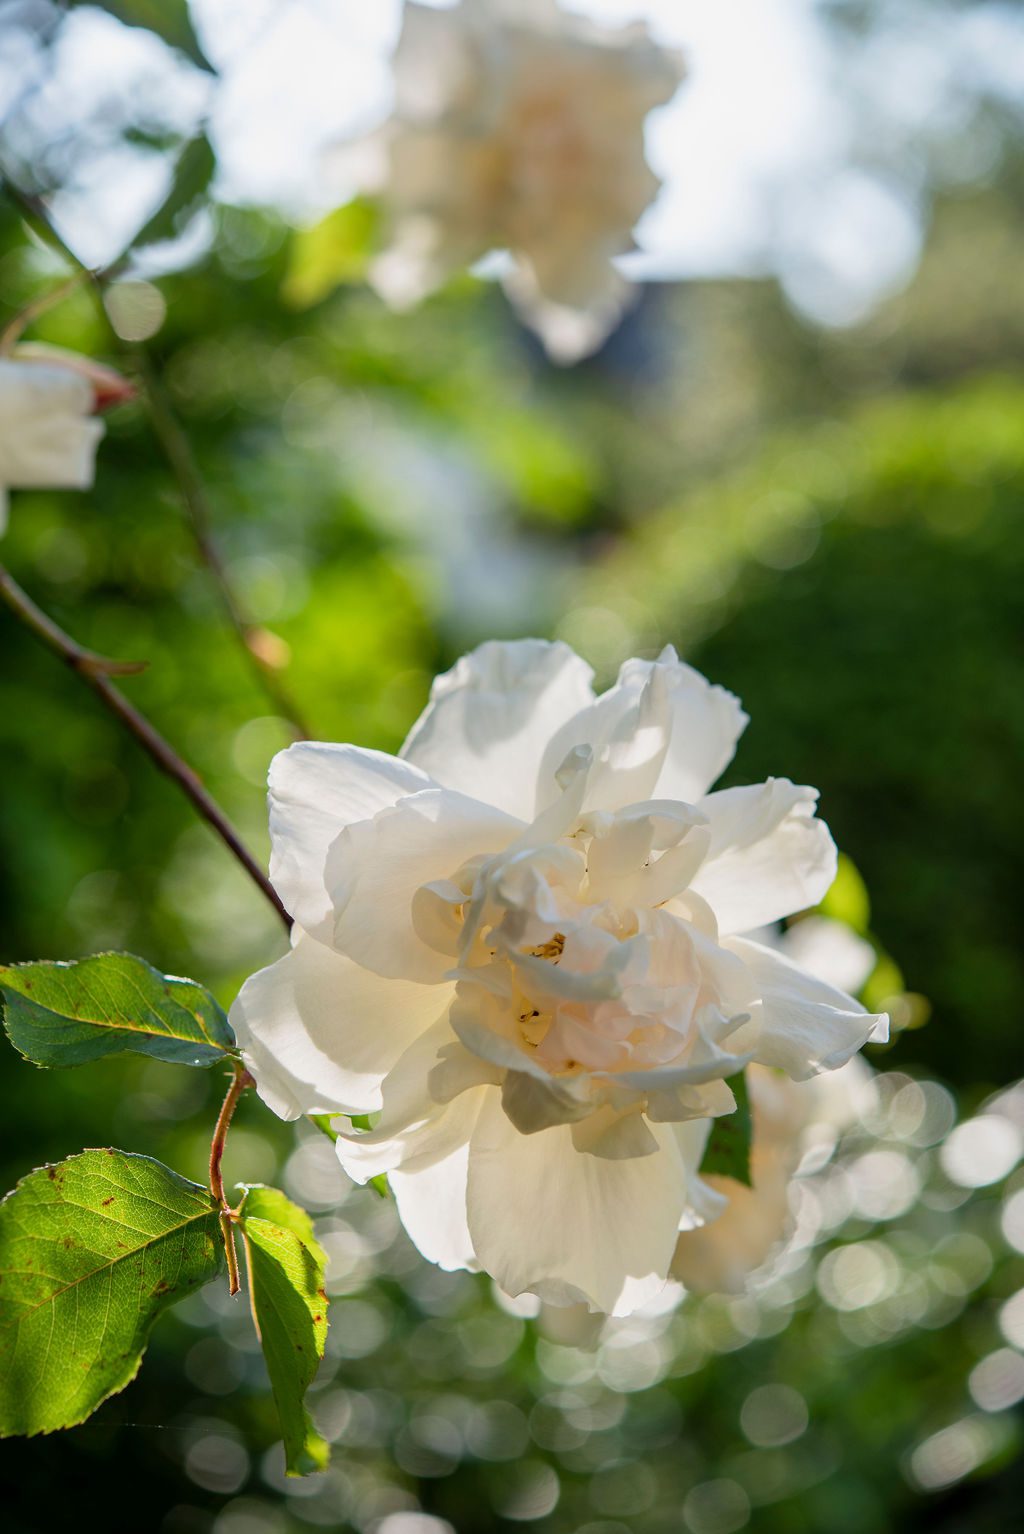 Sunlight shining through a climbing white rose, against a green garden.